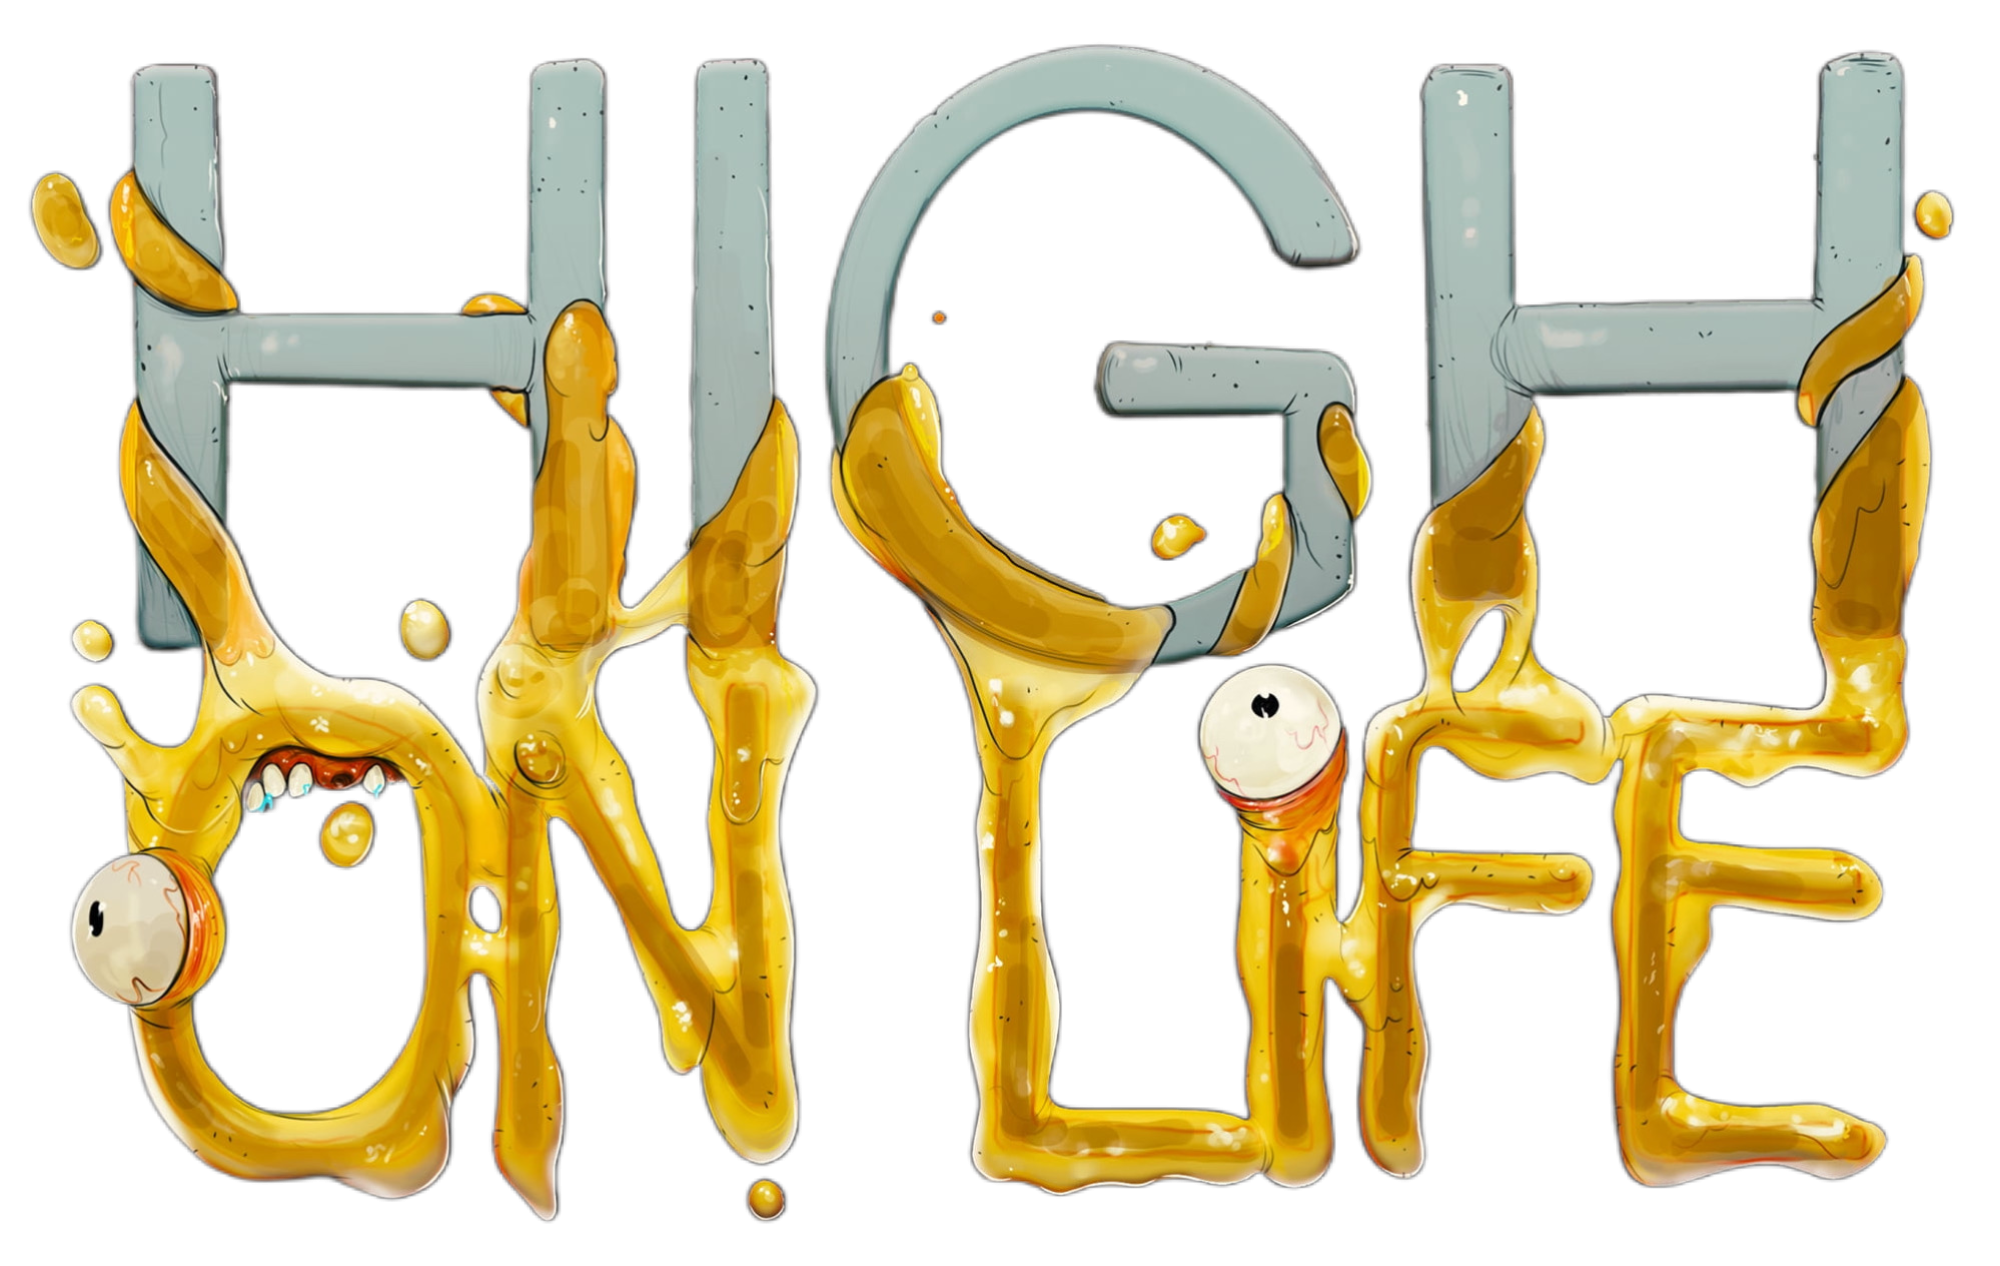 High on life на русском. High on Life logo. High Life лого. High on Life игра. High on Life арт.